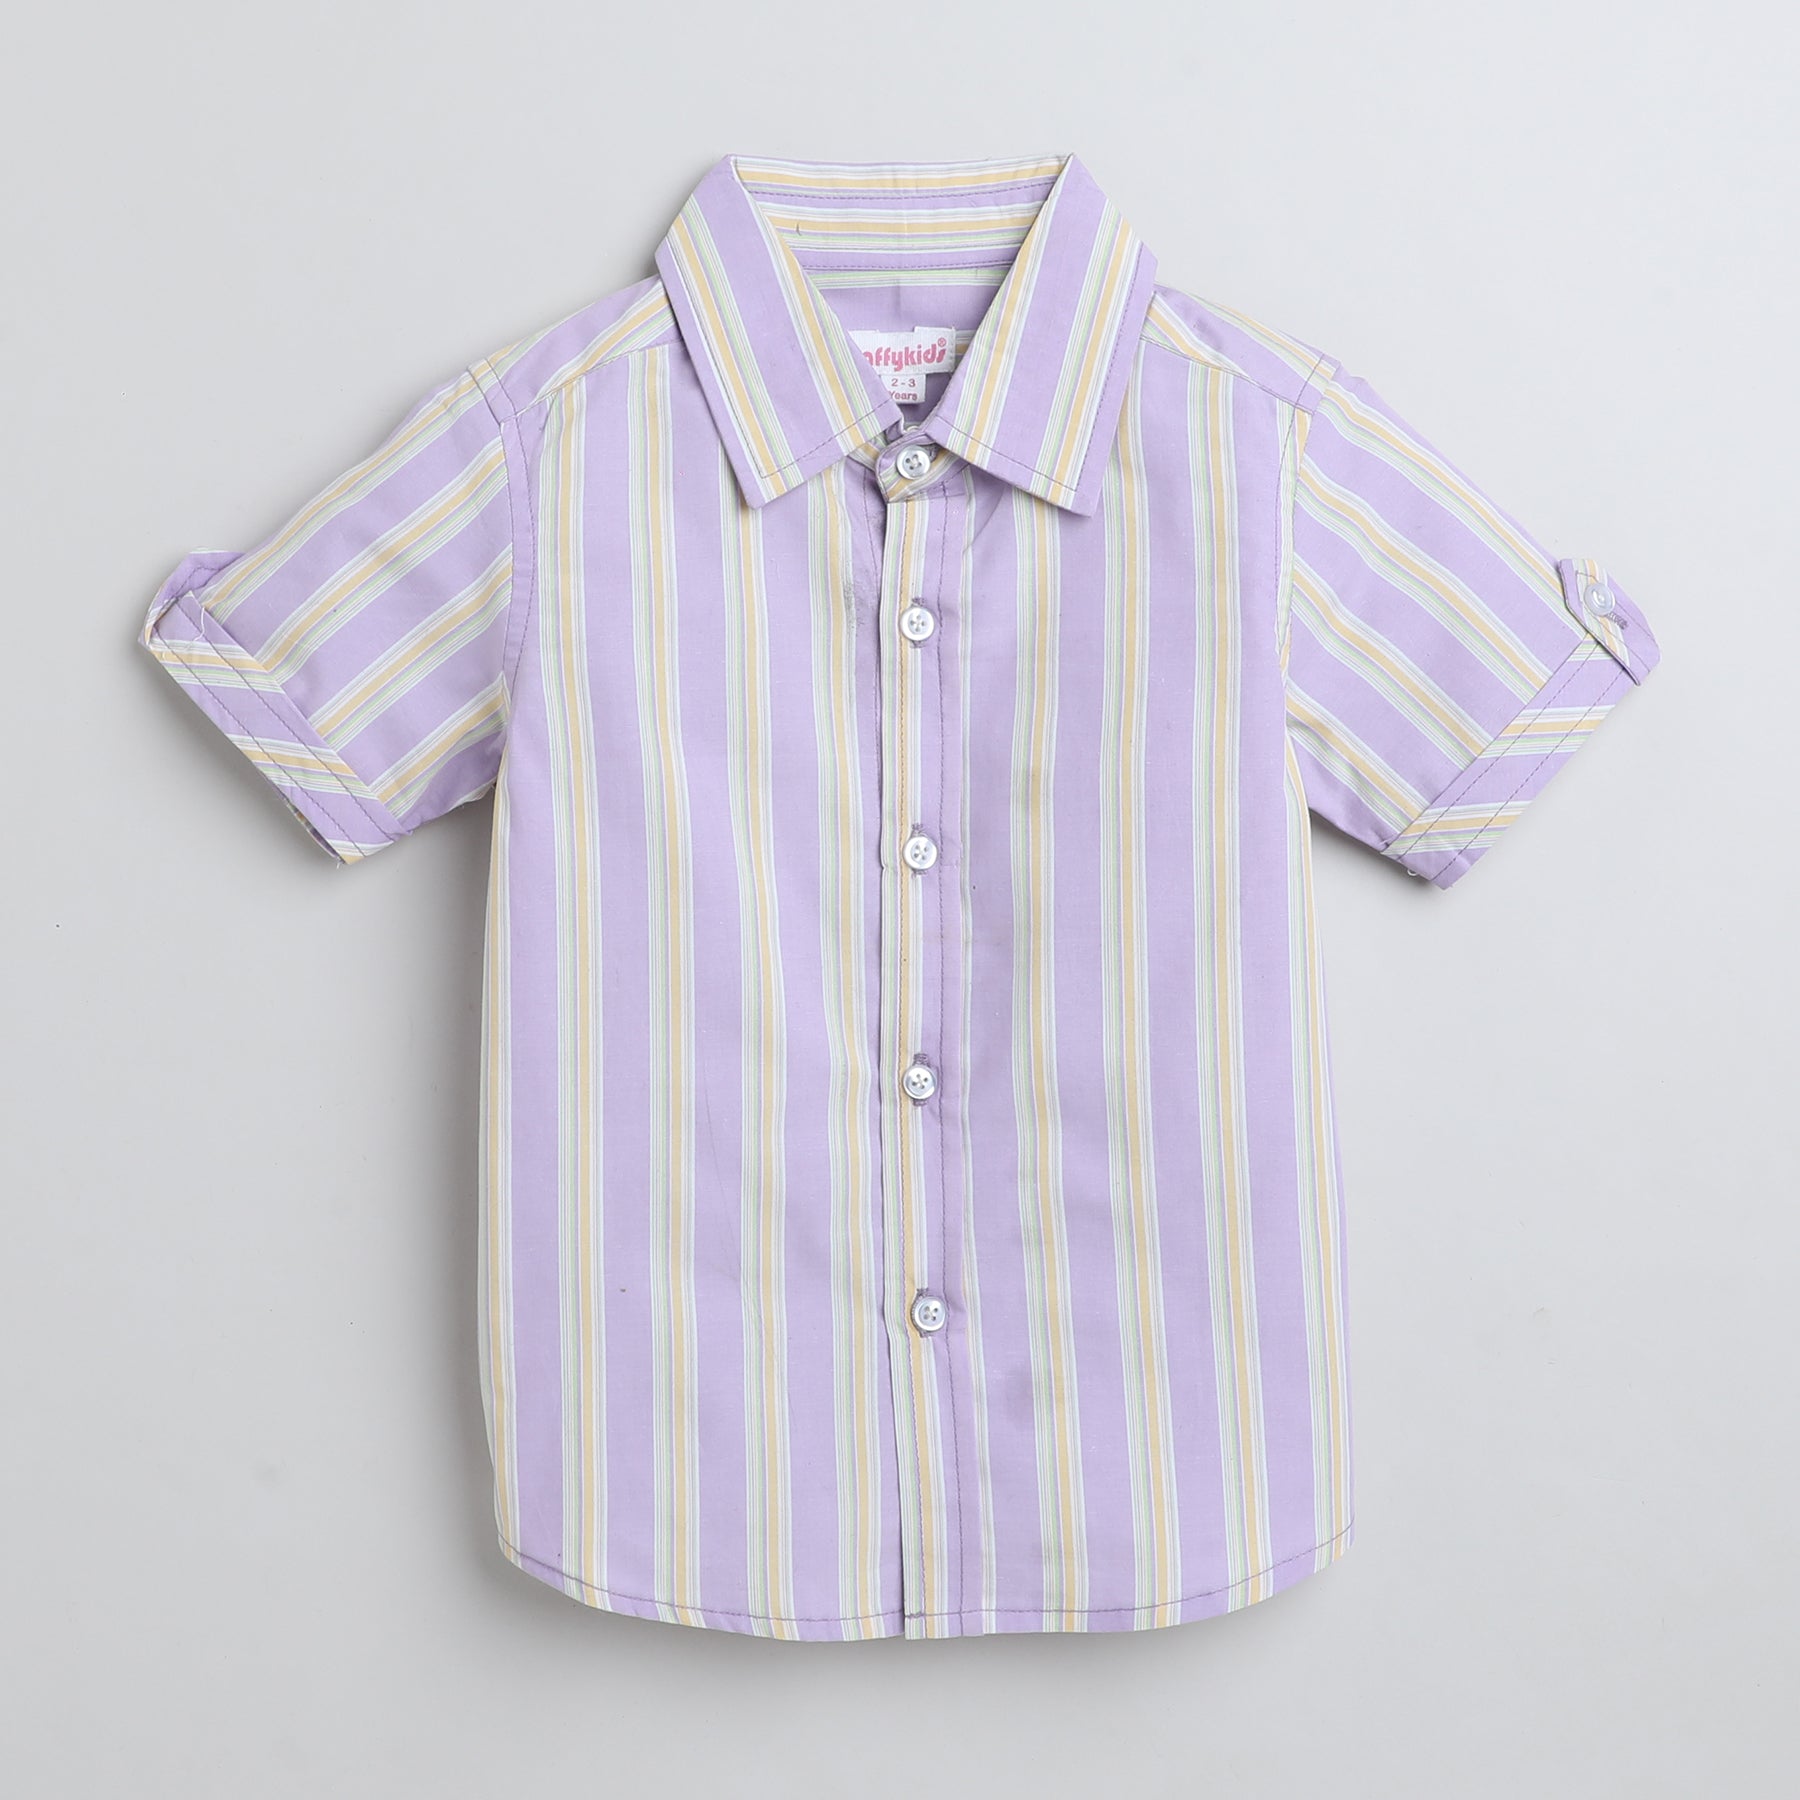 Taffykids popline striped Half sleeves Shirt-Purple/Multi